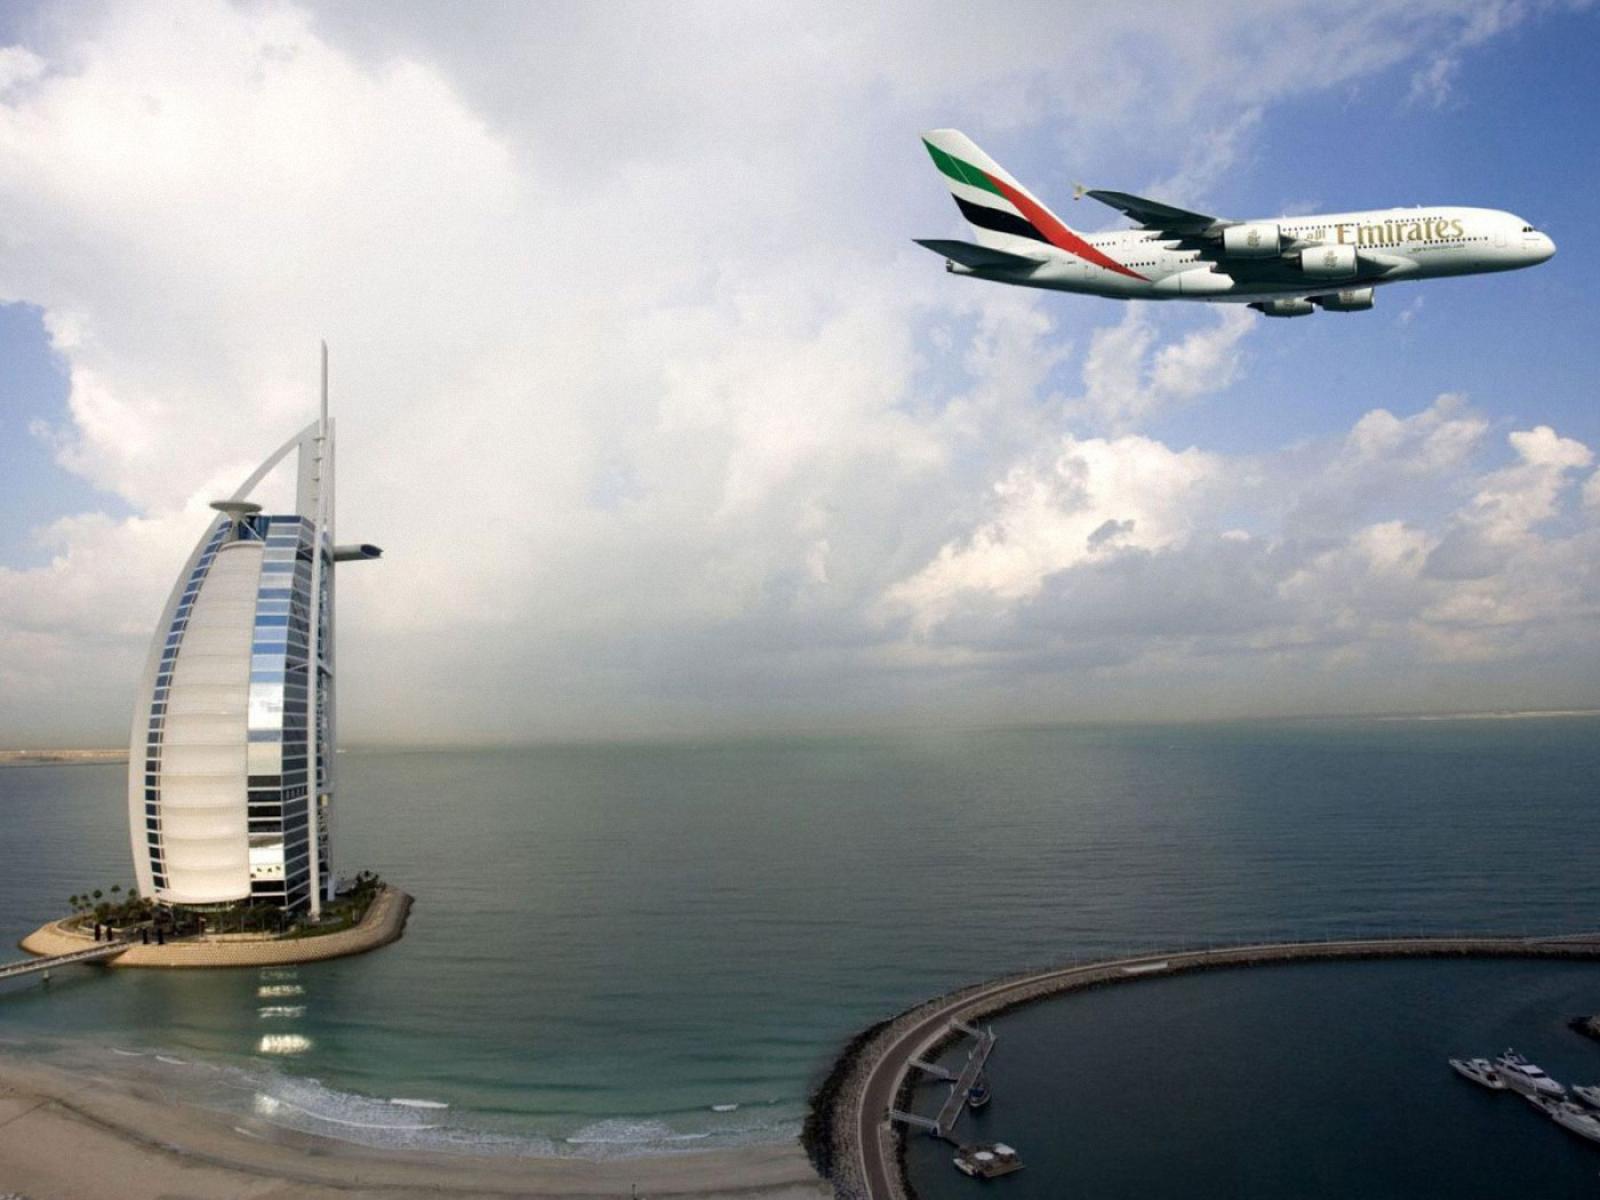 Самолет идет на посадку в Дубаи